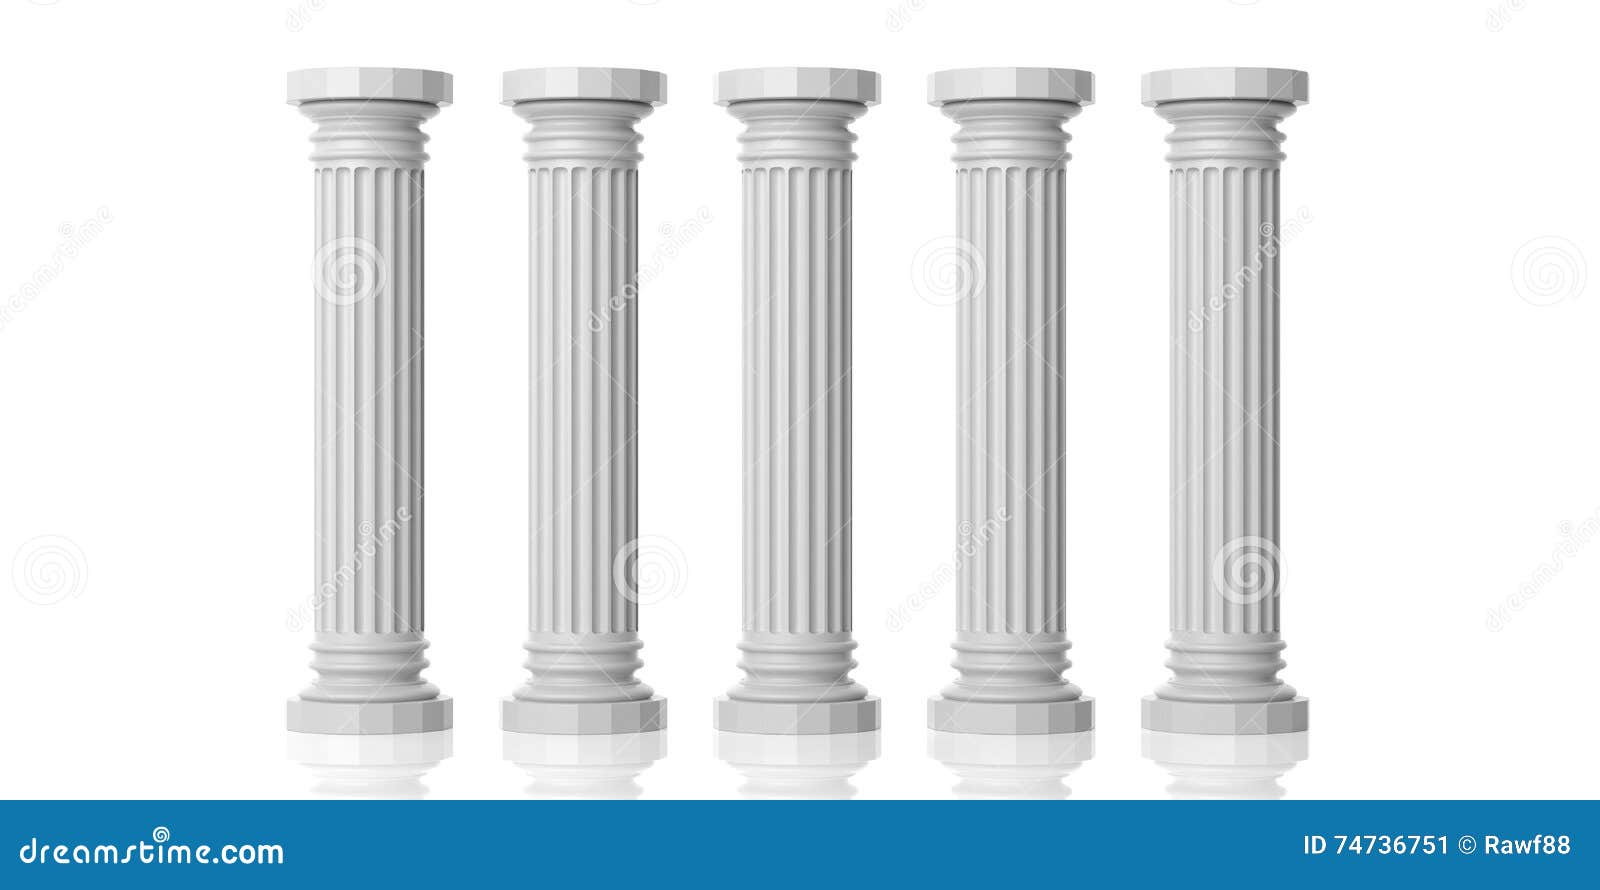 3d rendering five white marble pillars